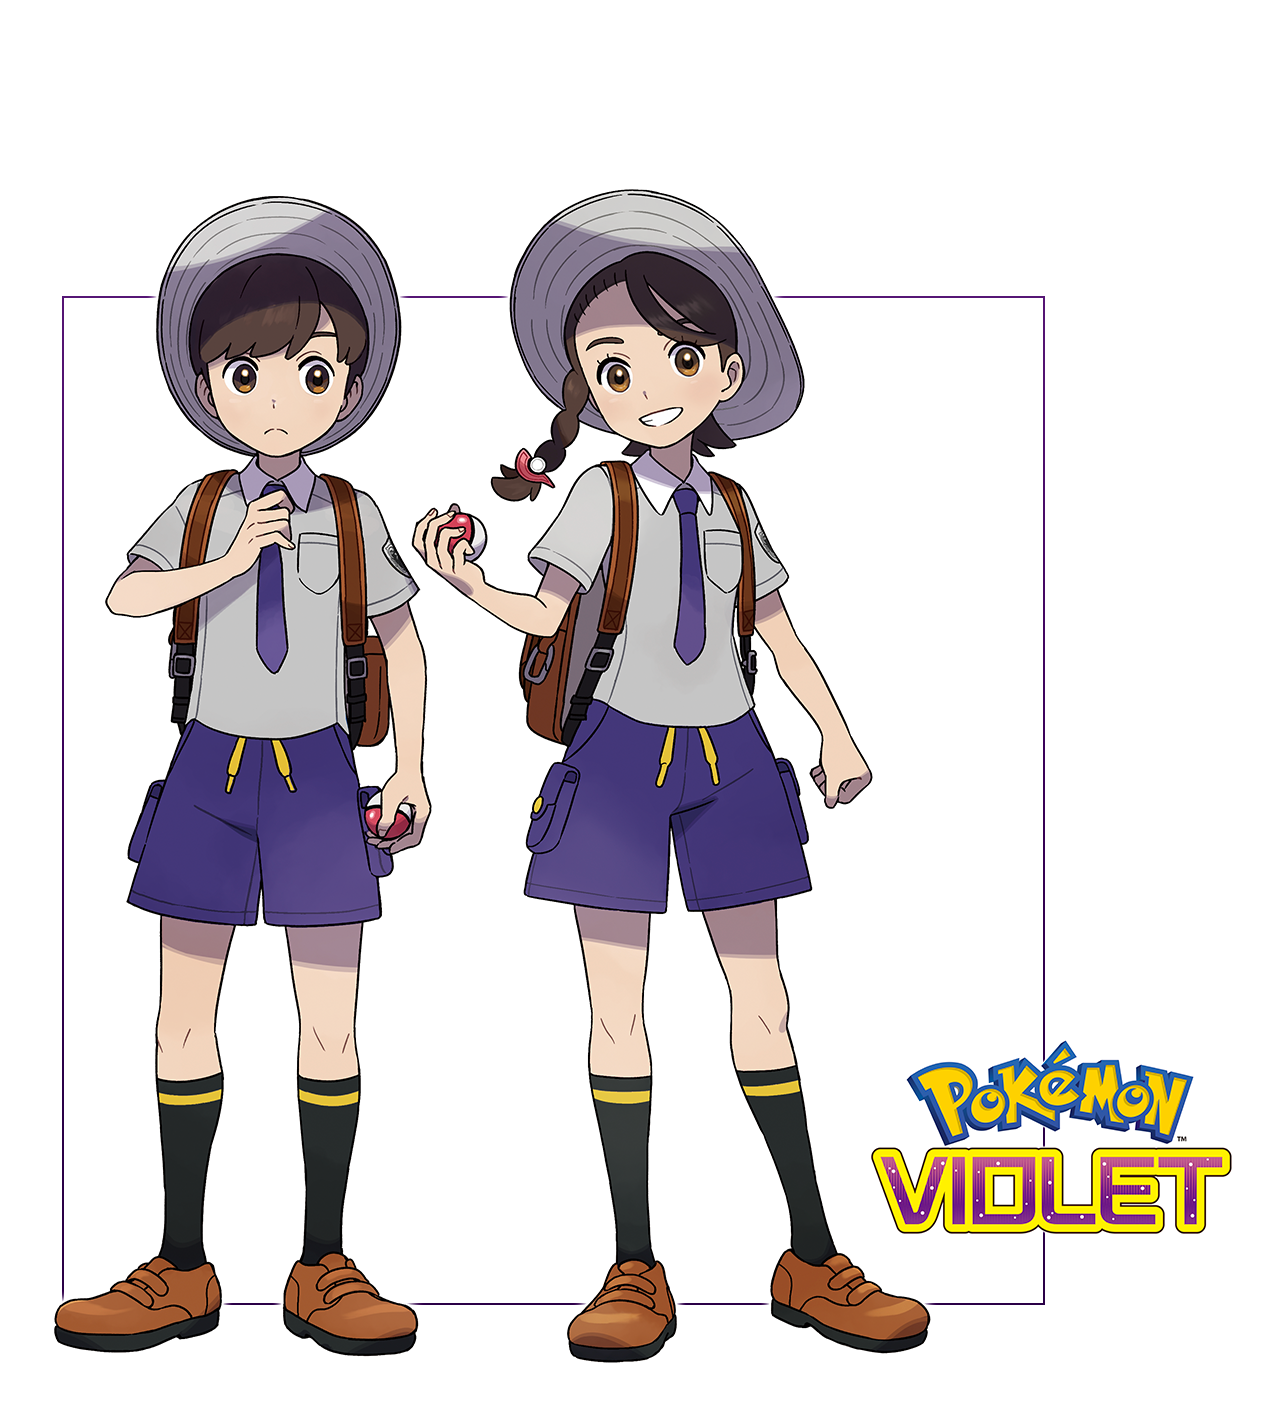 How to Purchase and Bonuses — Pokémon Scarlet and Pokémon Violet